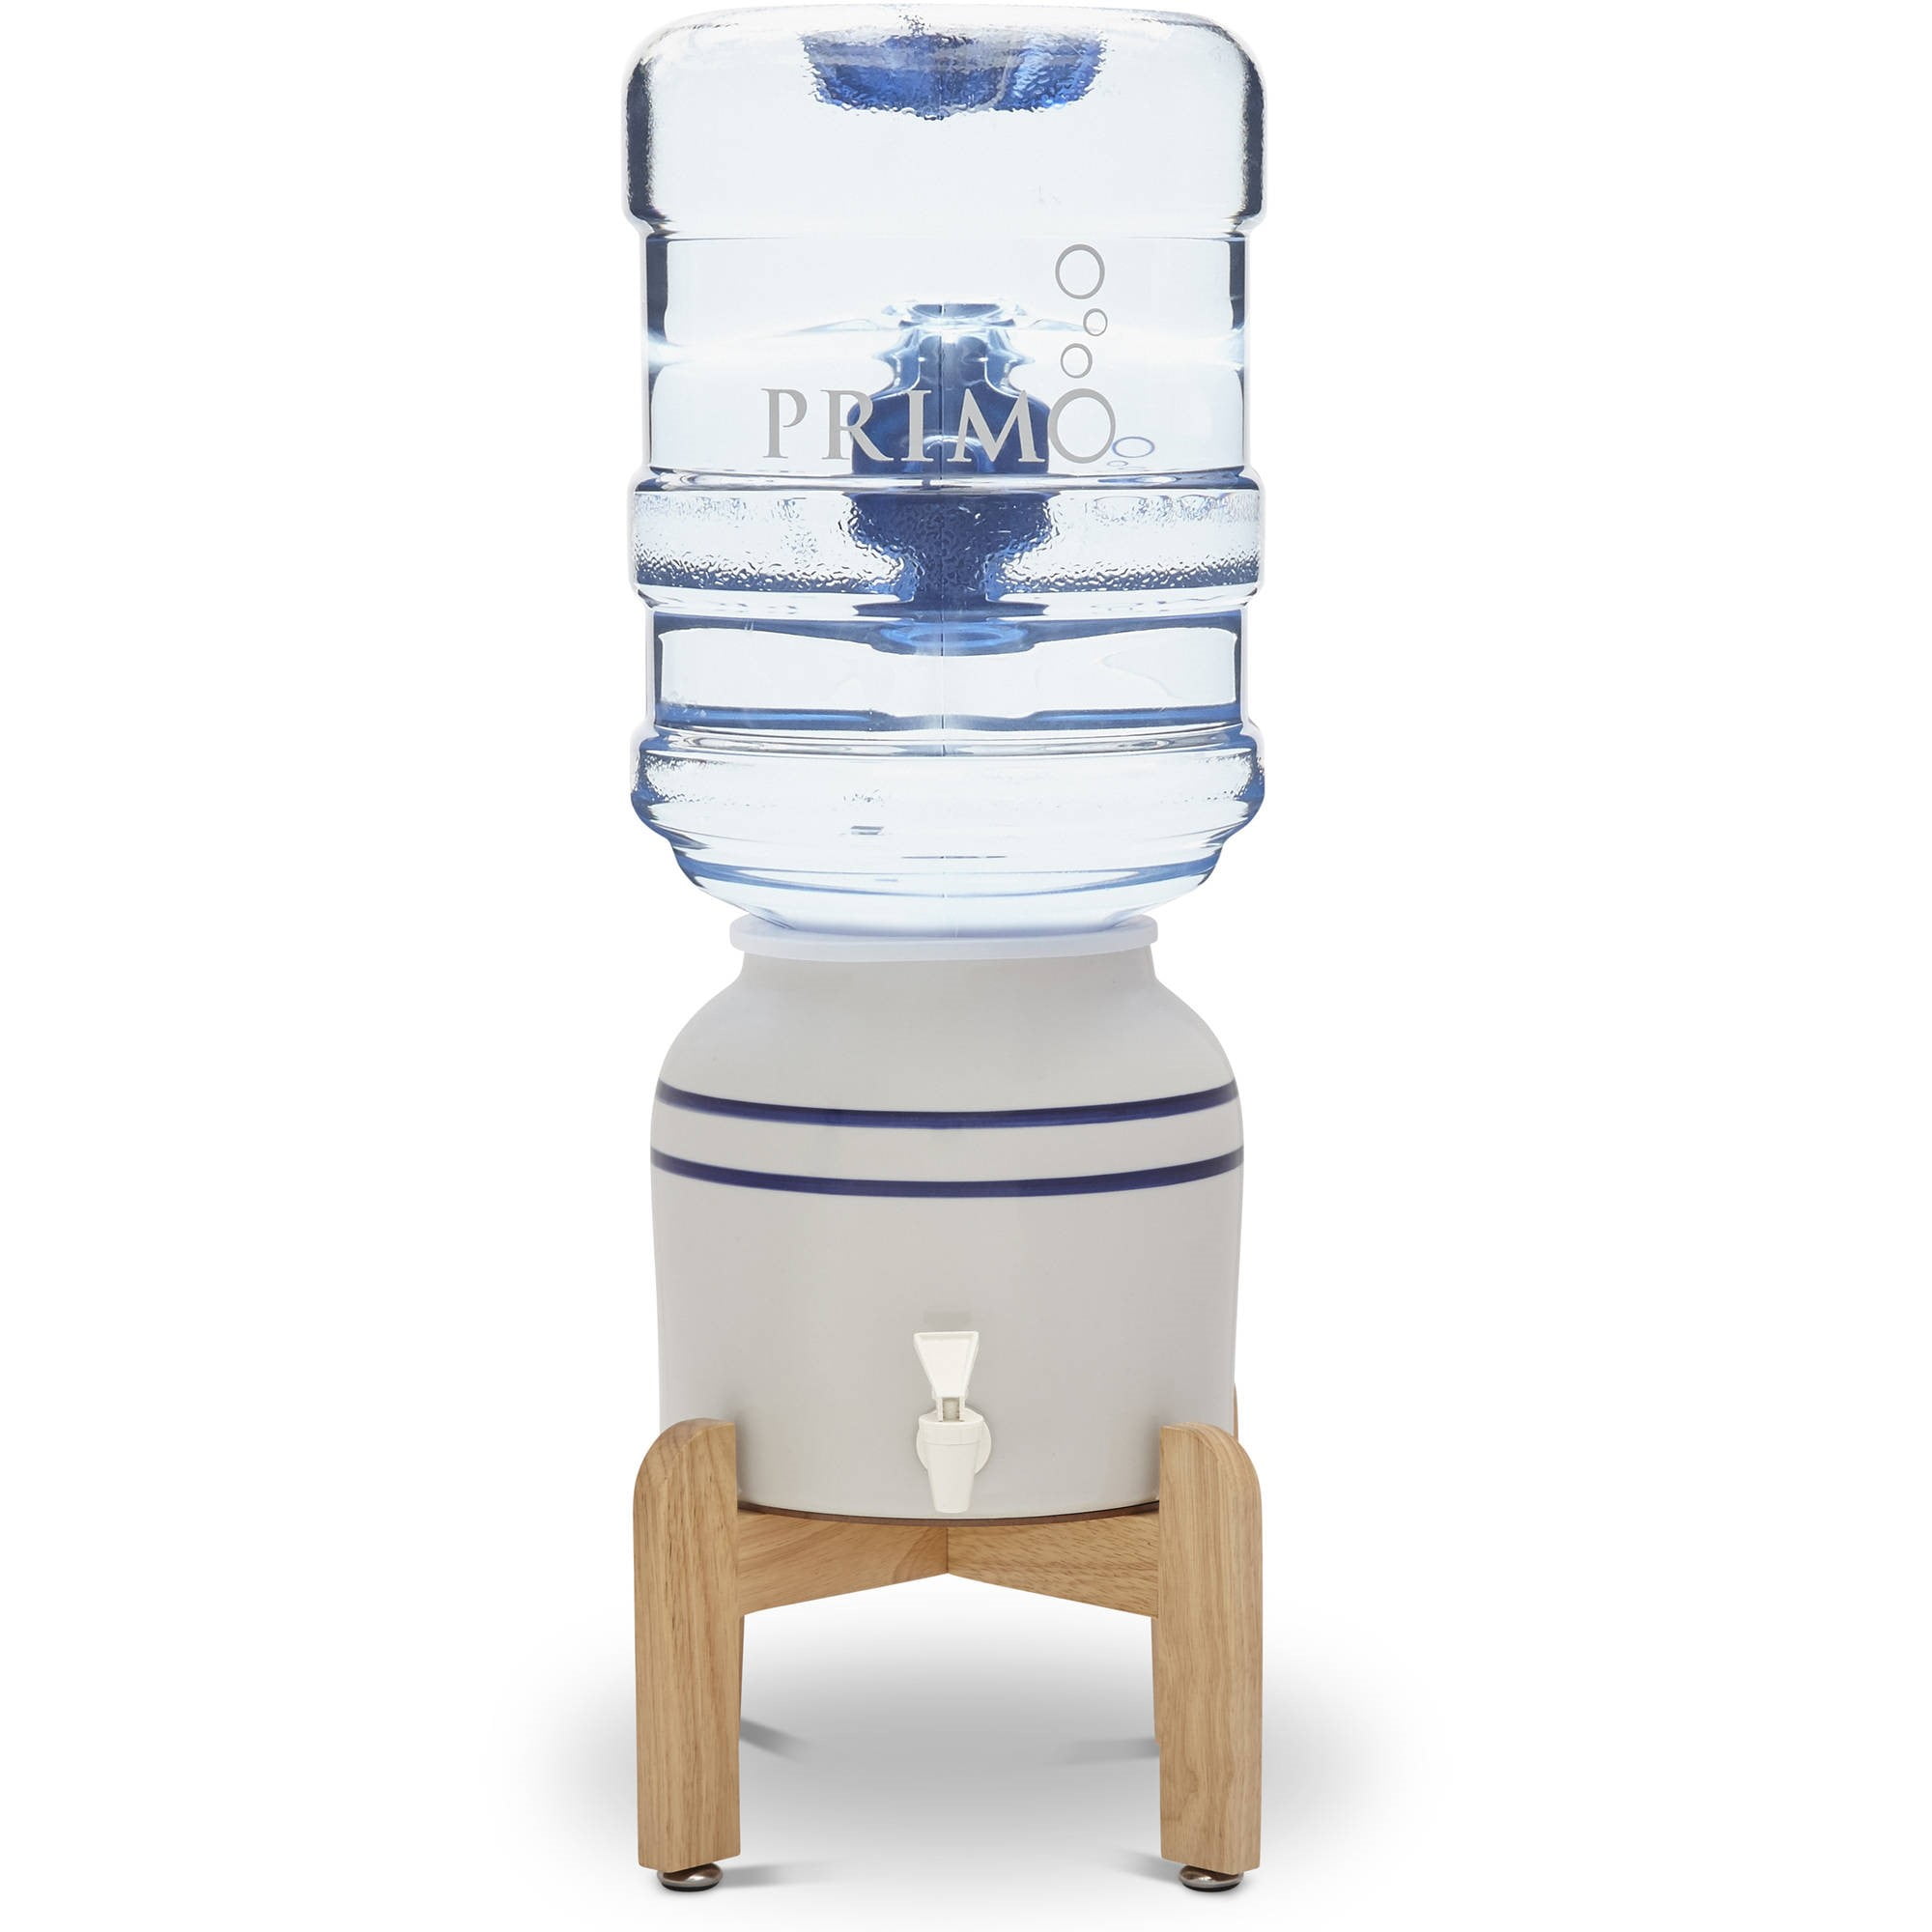 Primo Ceramic Water Dispenser with 